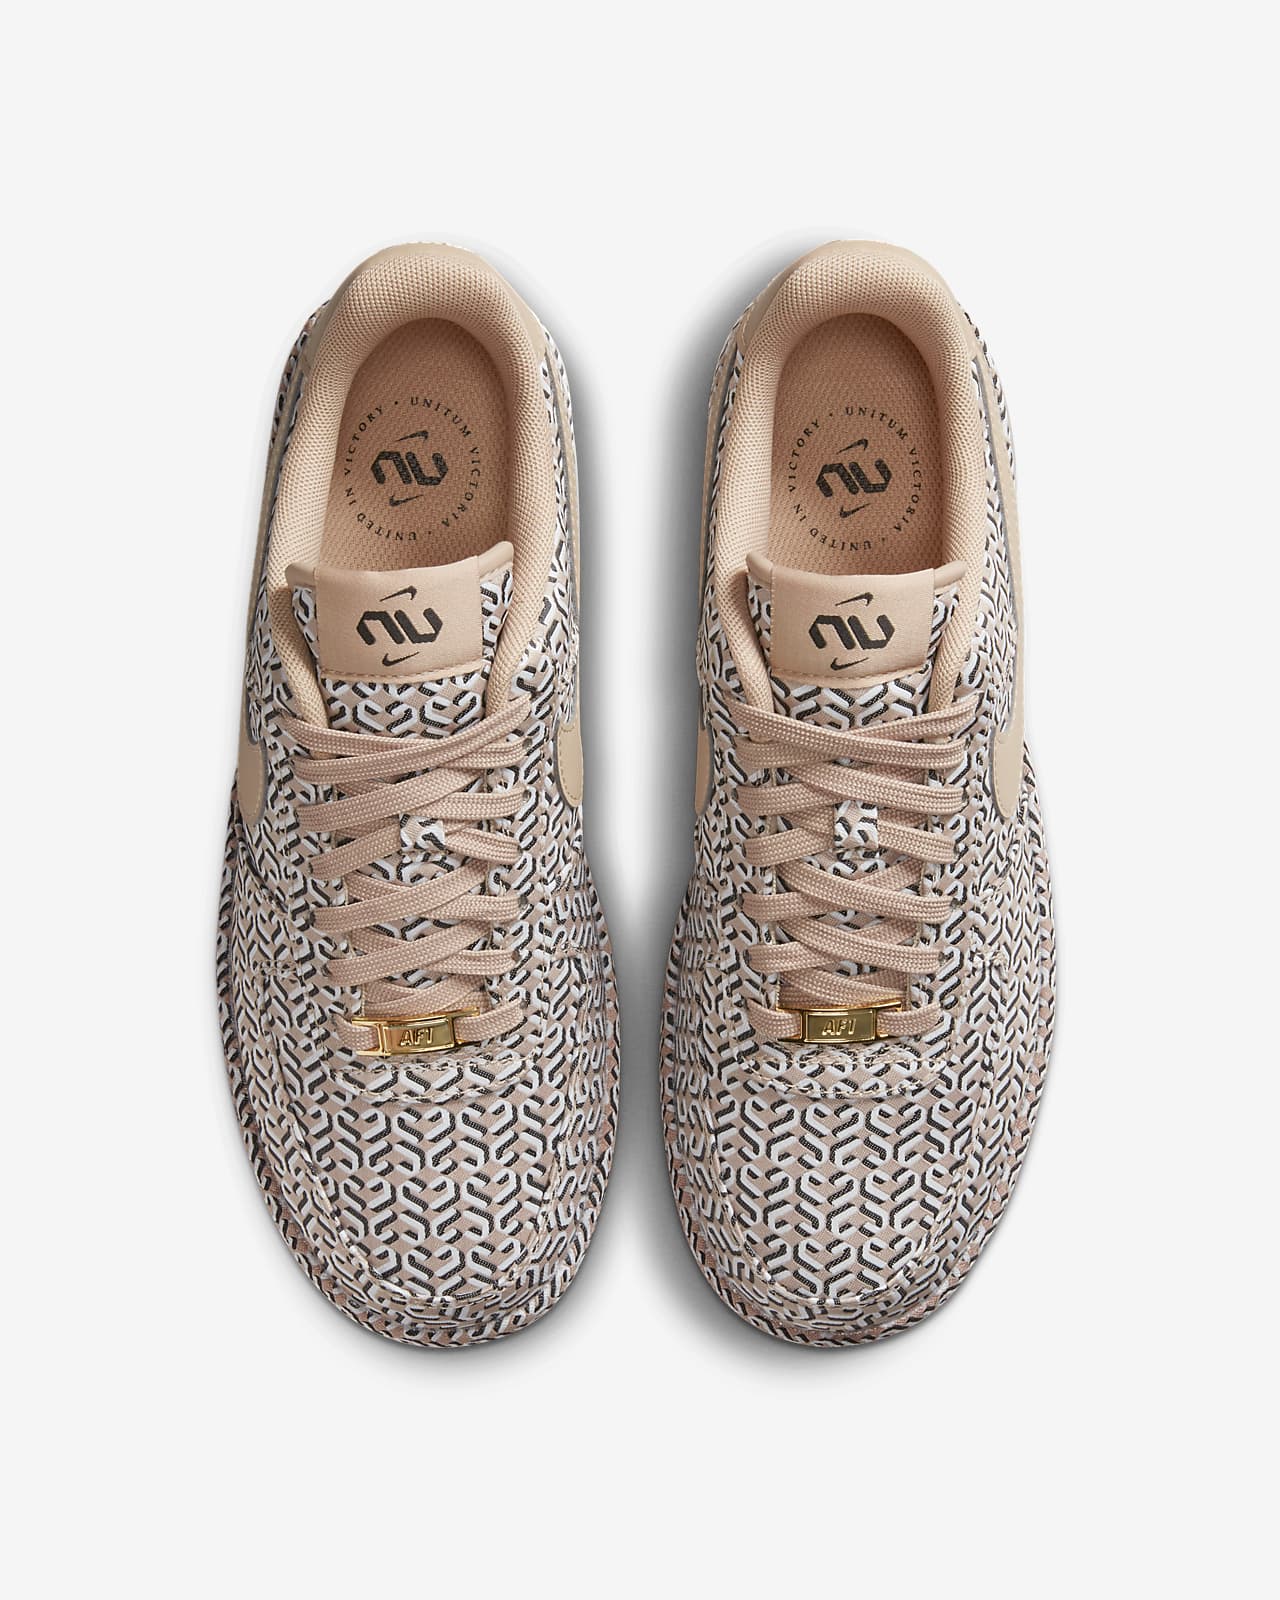 Nike Women's Air Force 1 Basketball Shoes, White/White-metallic Gold, 6.5